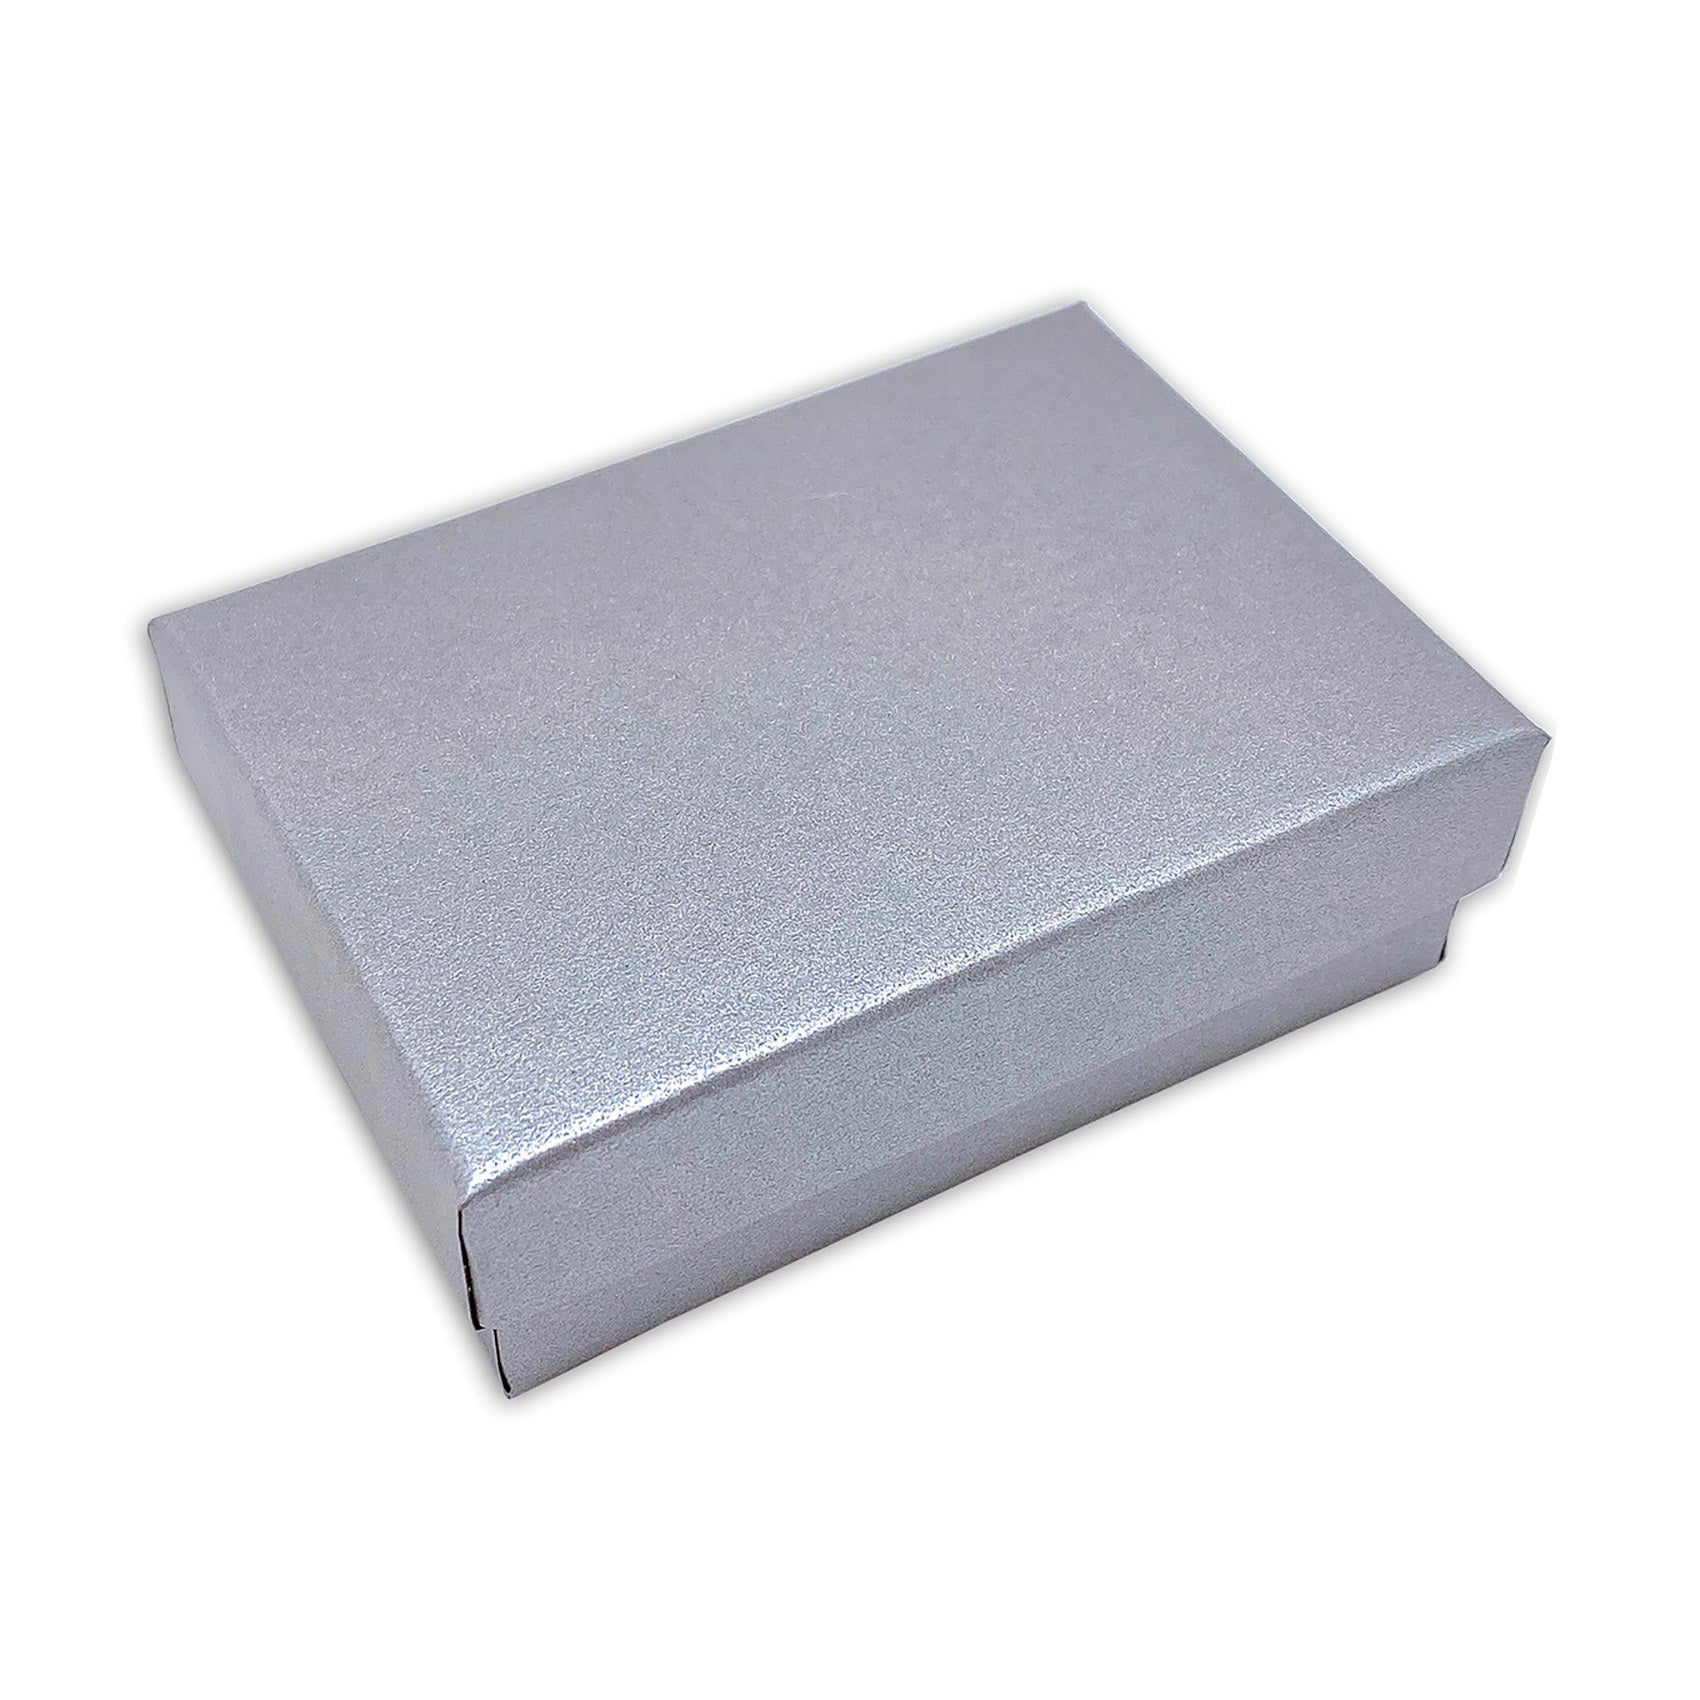 3 1/4" x 2 1/4" x 1" Pearl Gray Cotton Filled Paper Box